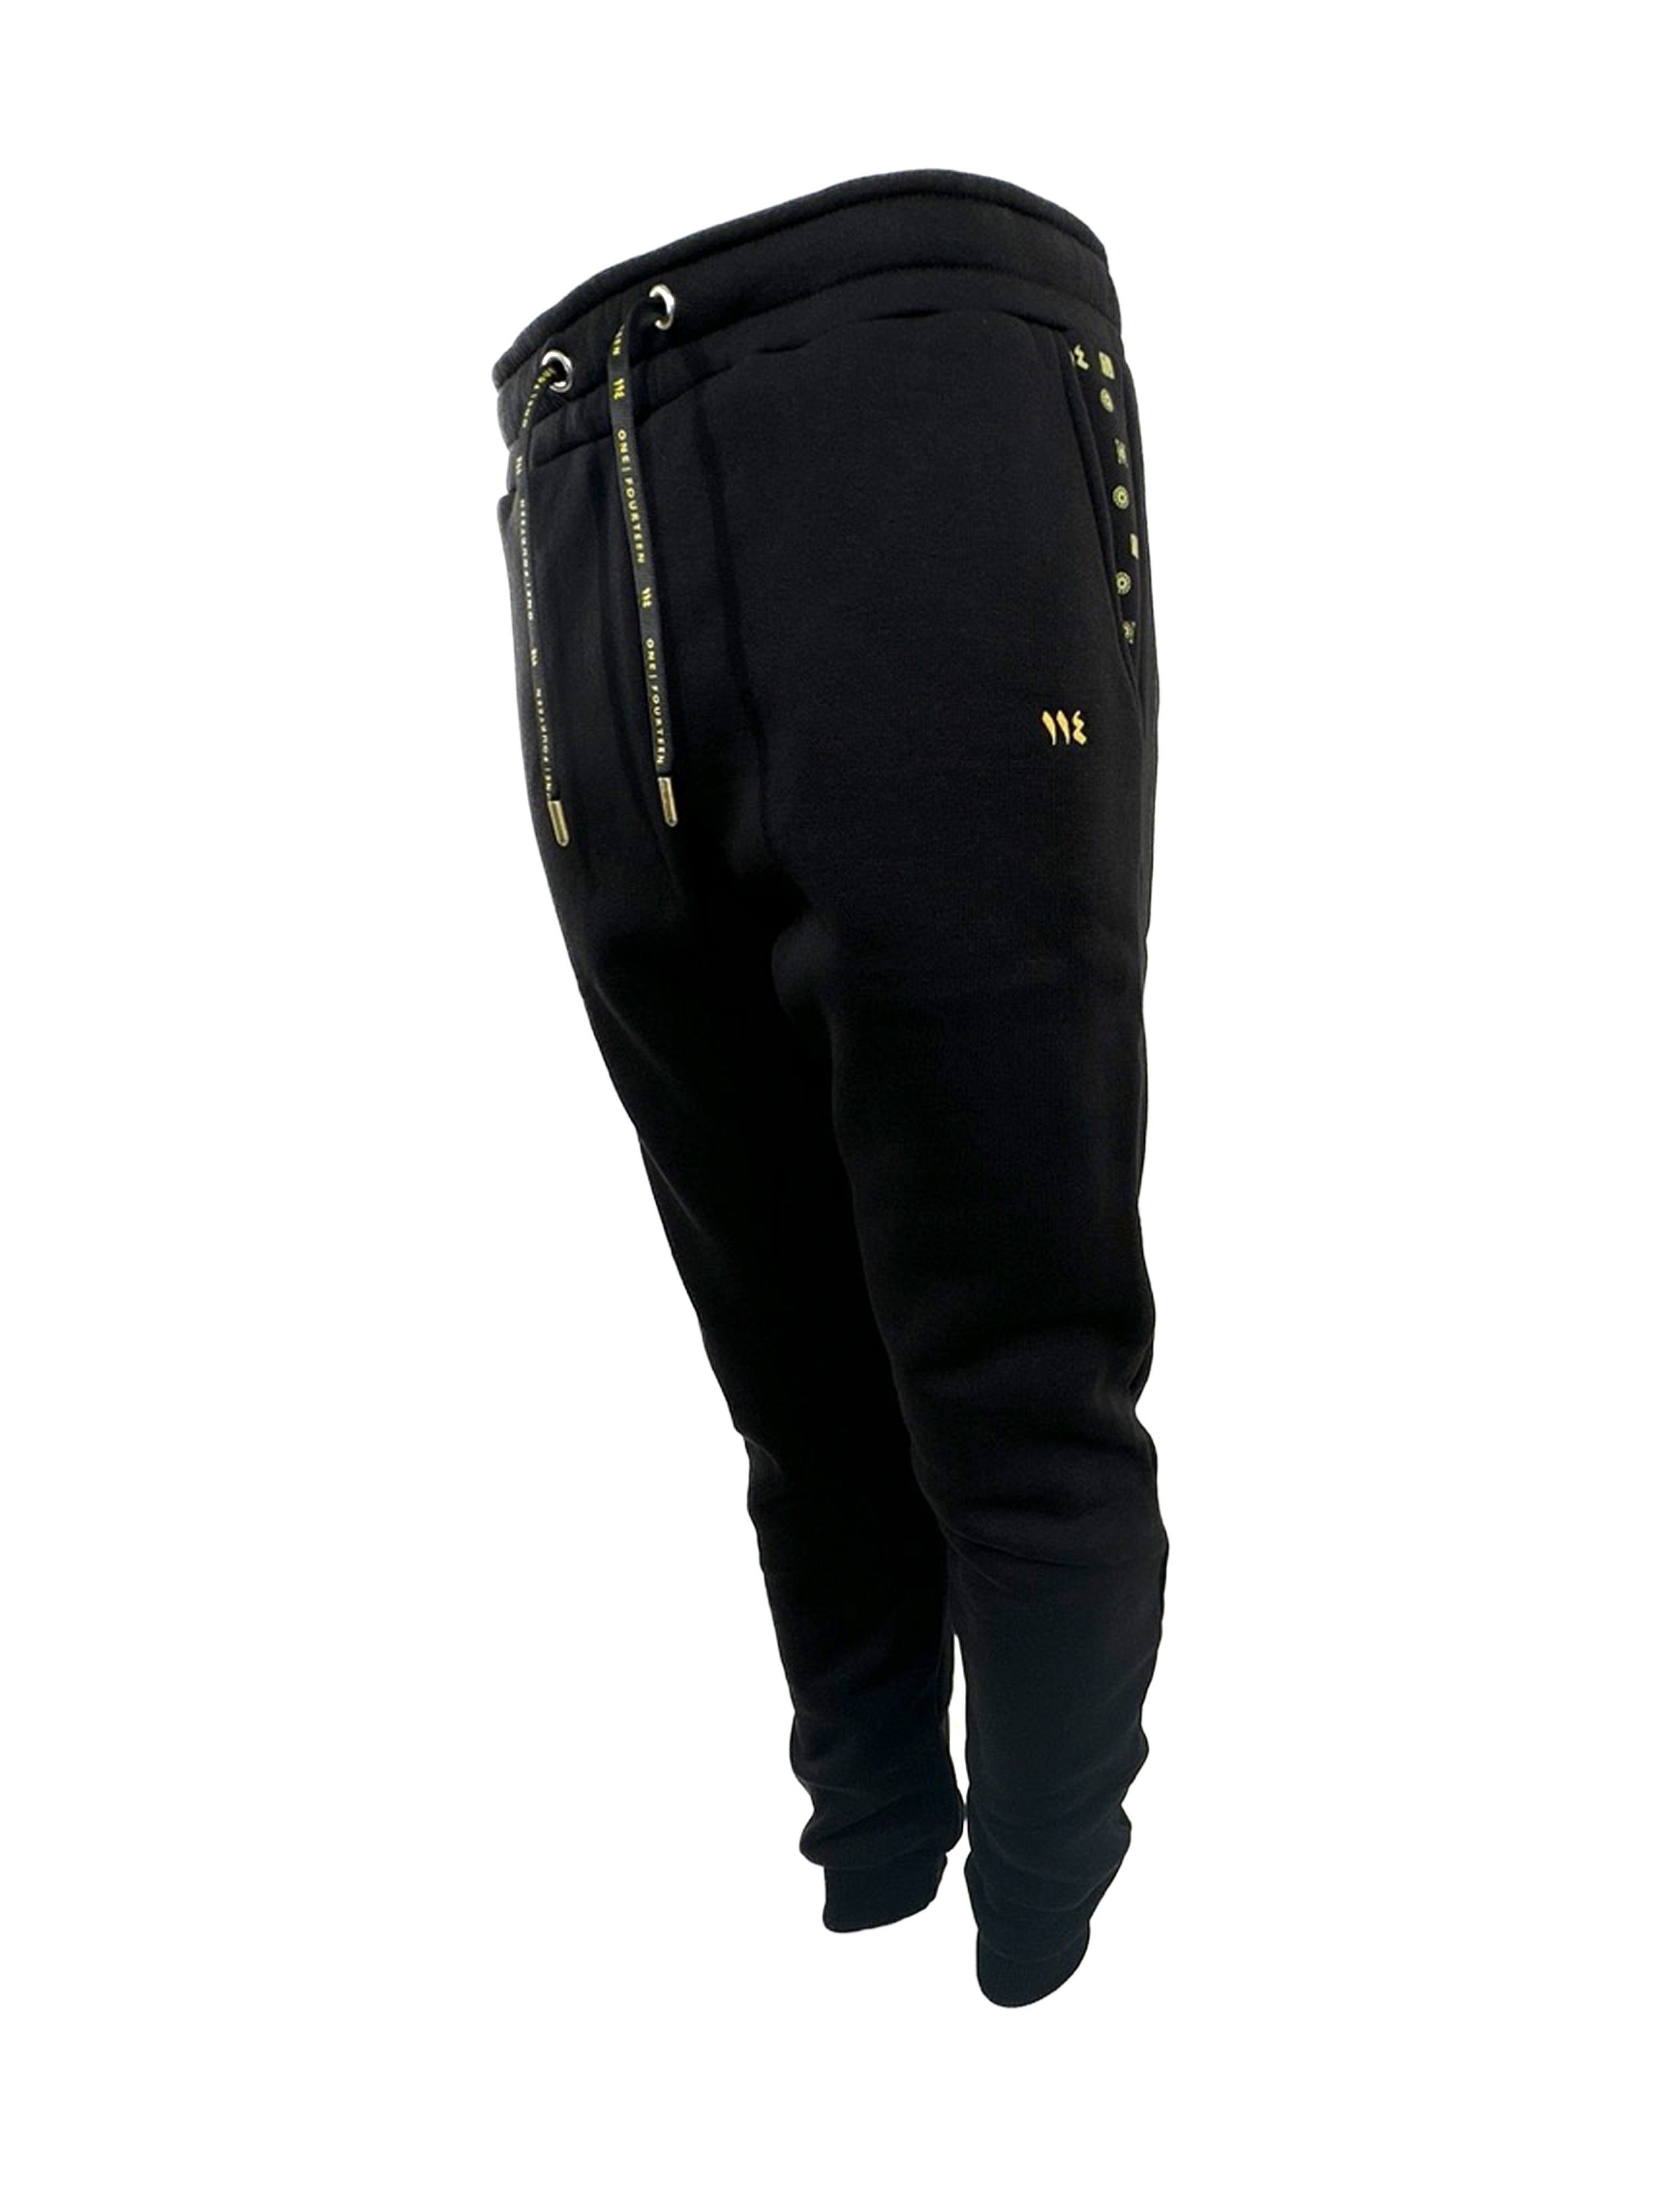 Fez Black Joggers - One fourteen apparel